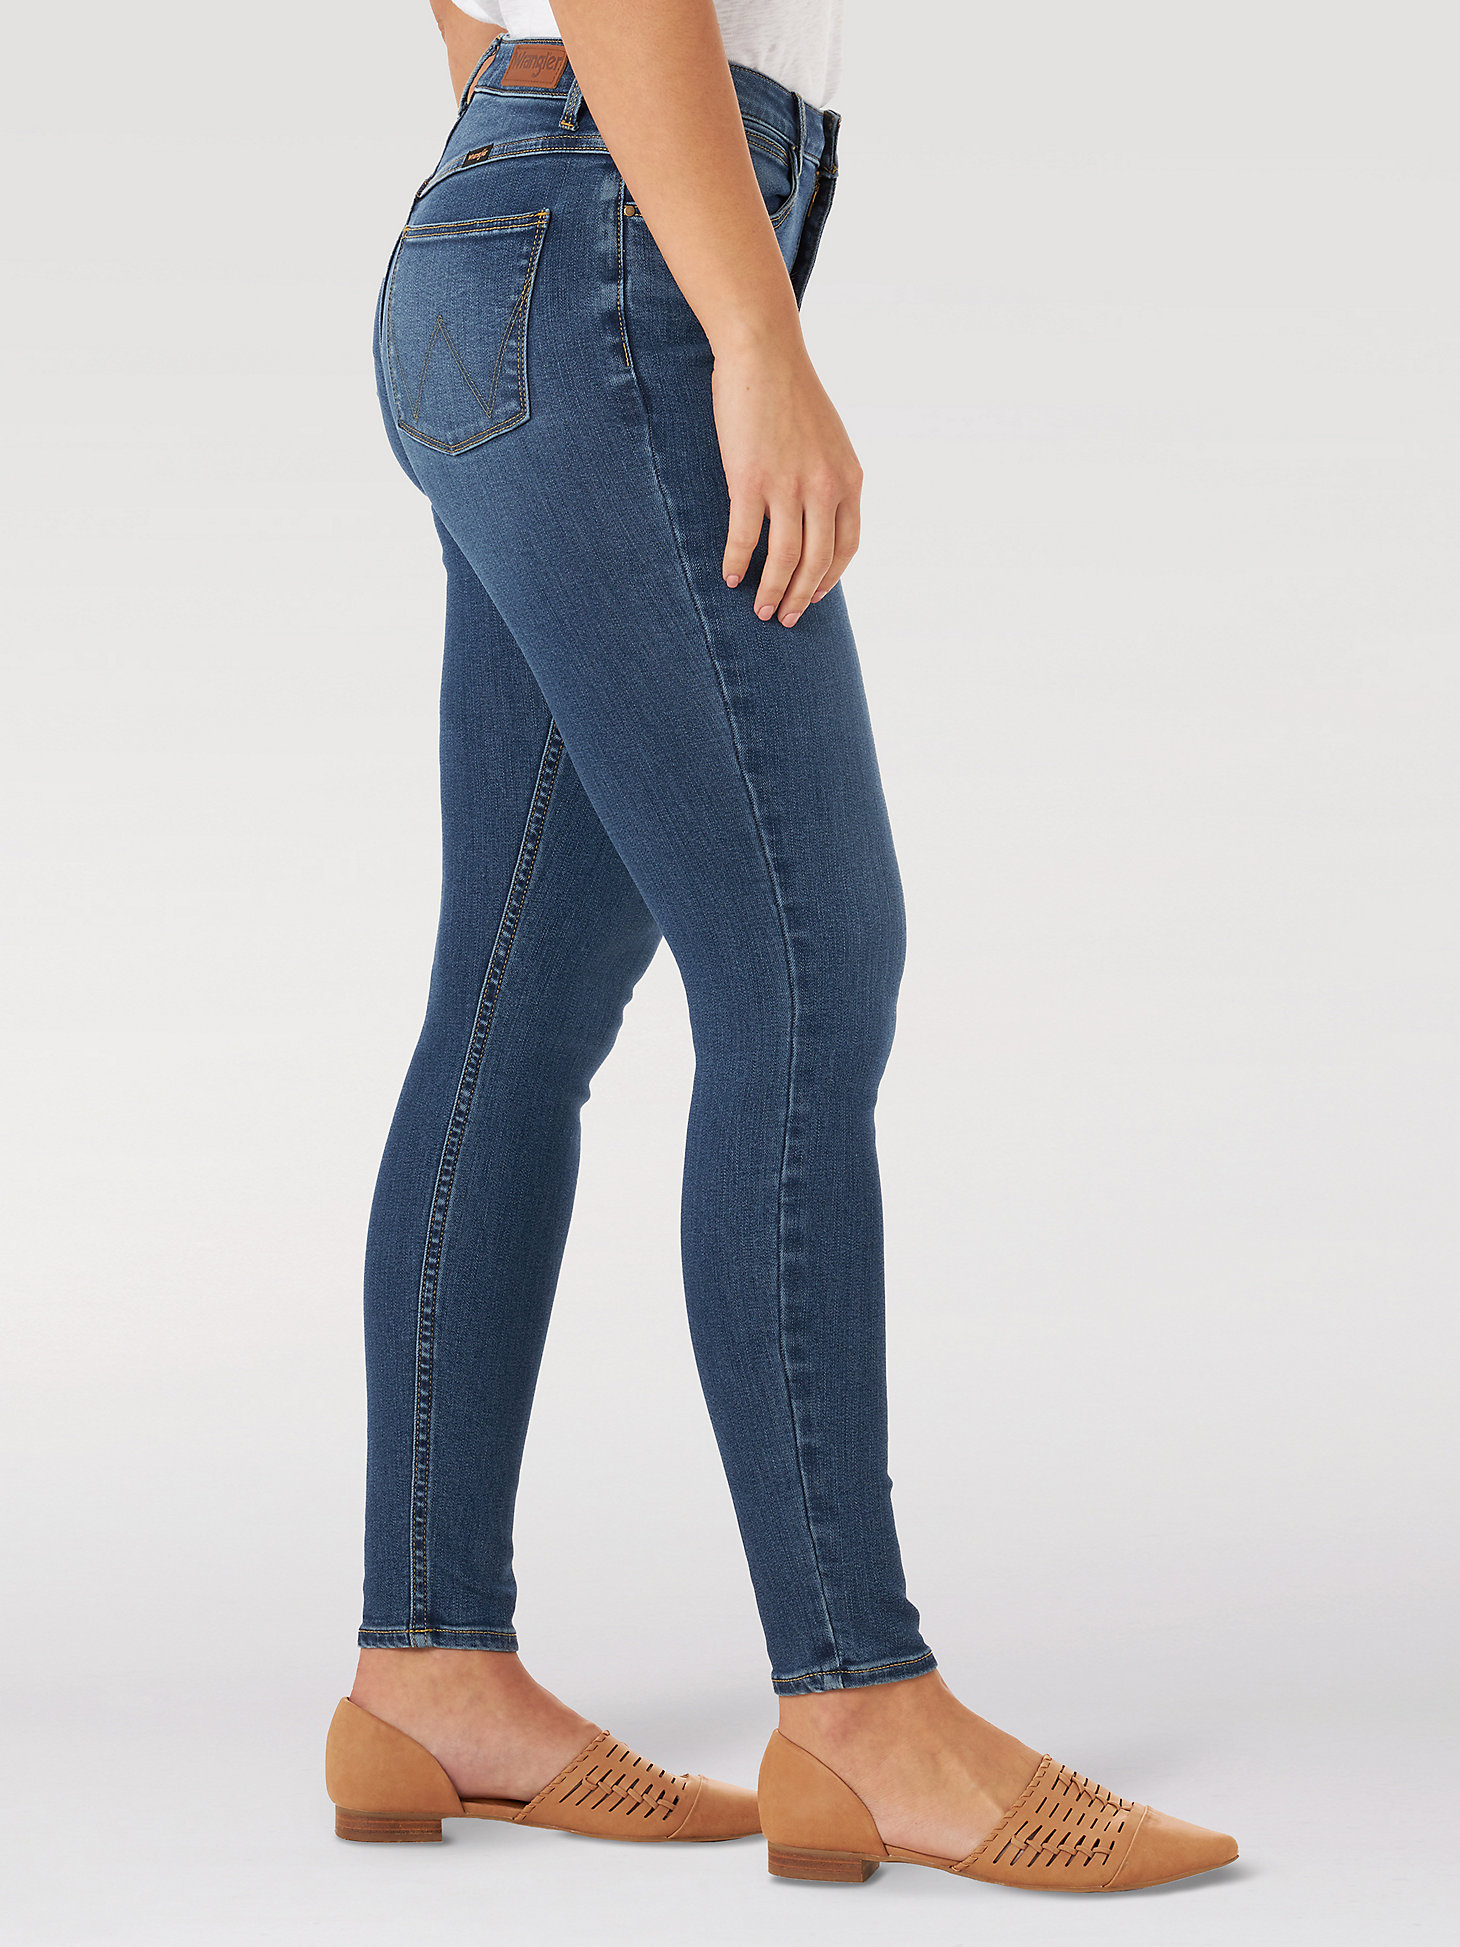 Women's Wrangler® High Rise Unforgettable Skinny Jean in Marina alternative view 2